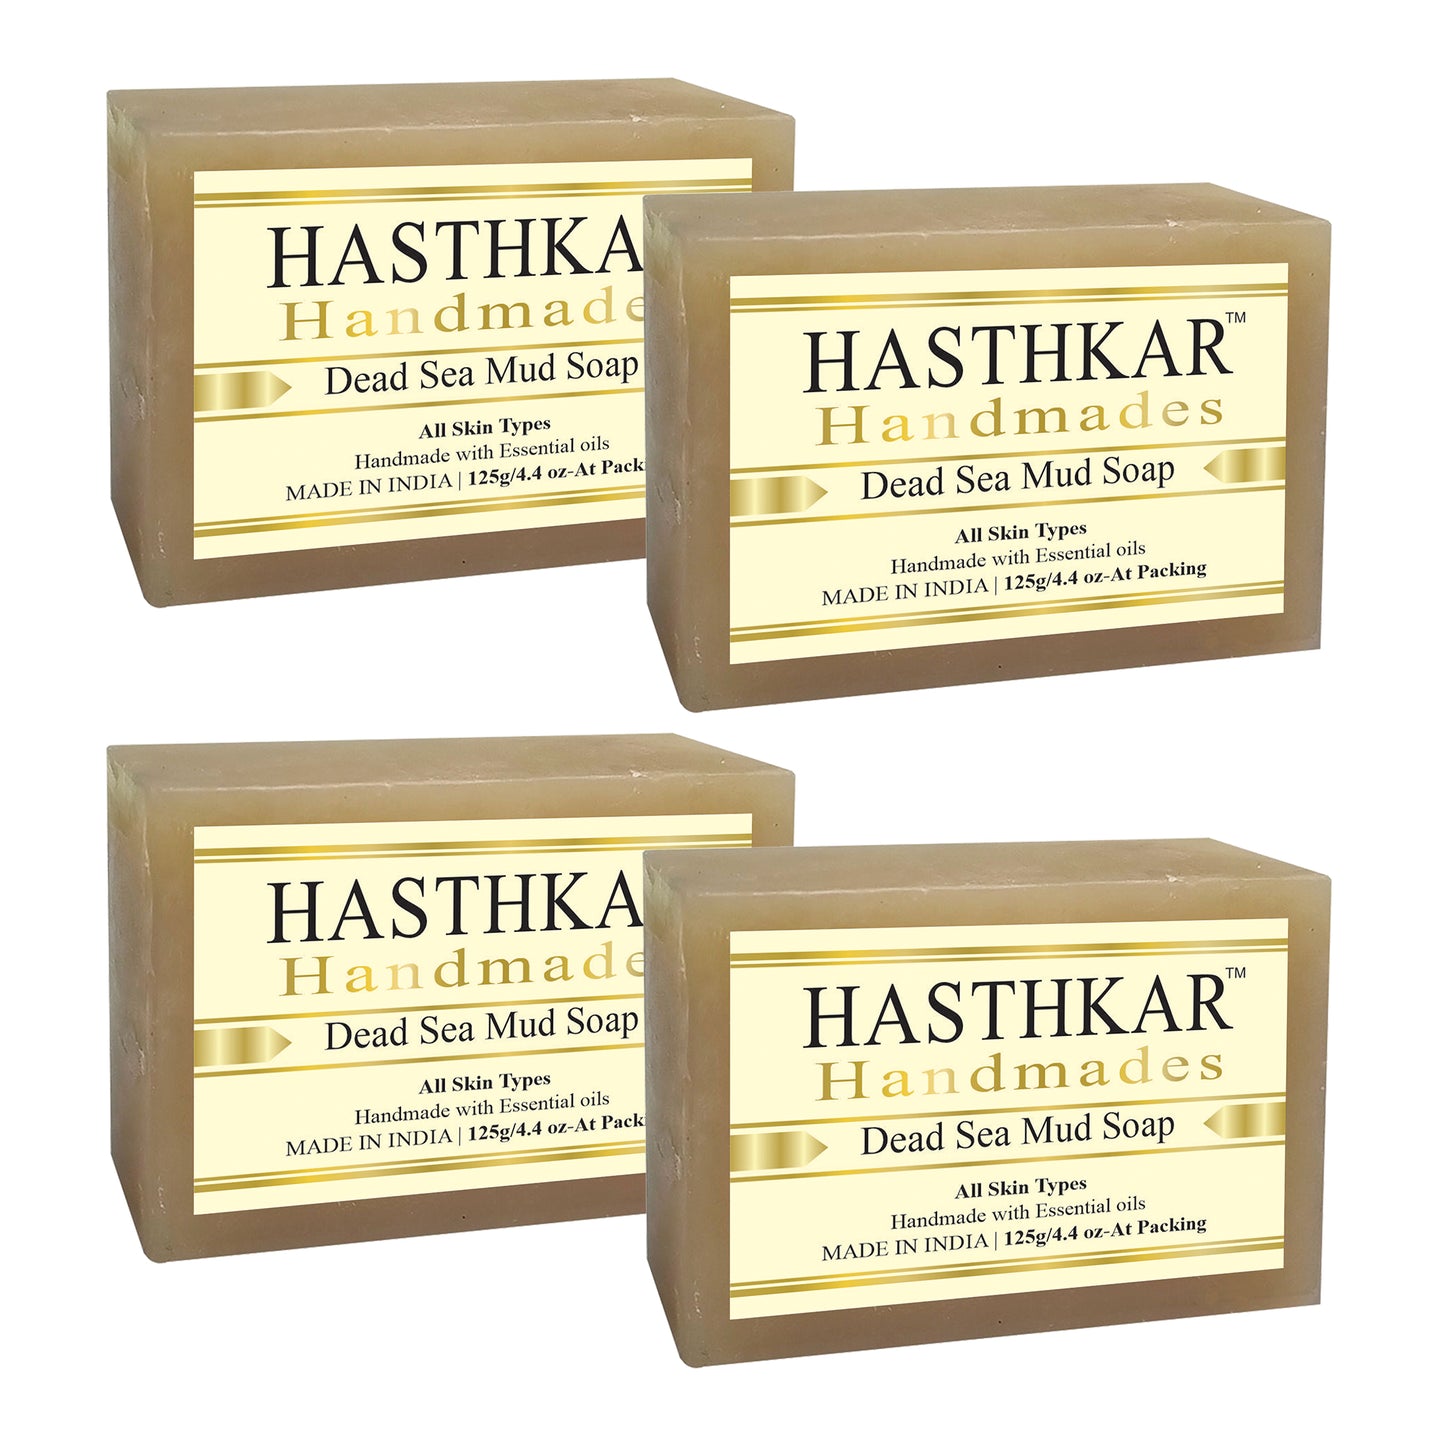 Hasthkar Handmades Glycerine Natural Dead sea mud Soap 125Gm